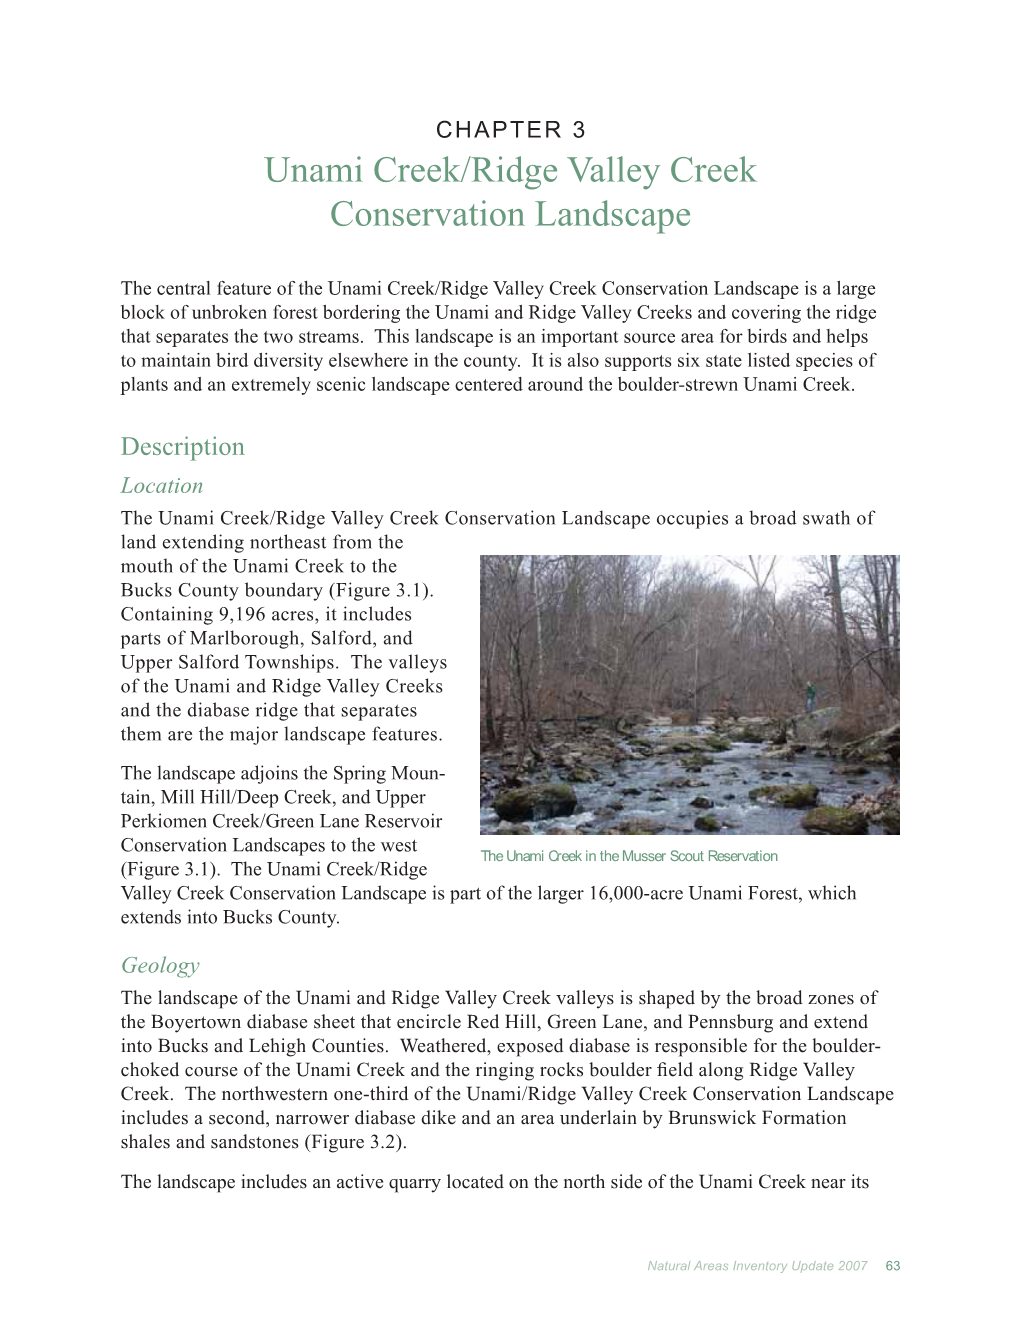 Unami Creek/Ridge Valley Creek Conservation Landscape